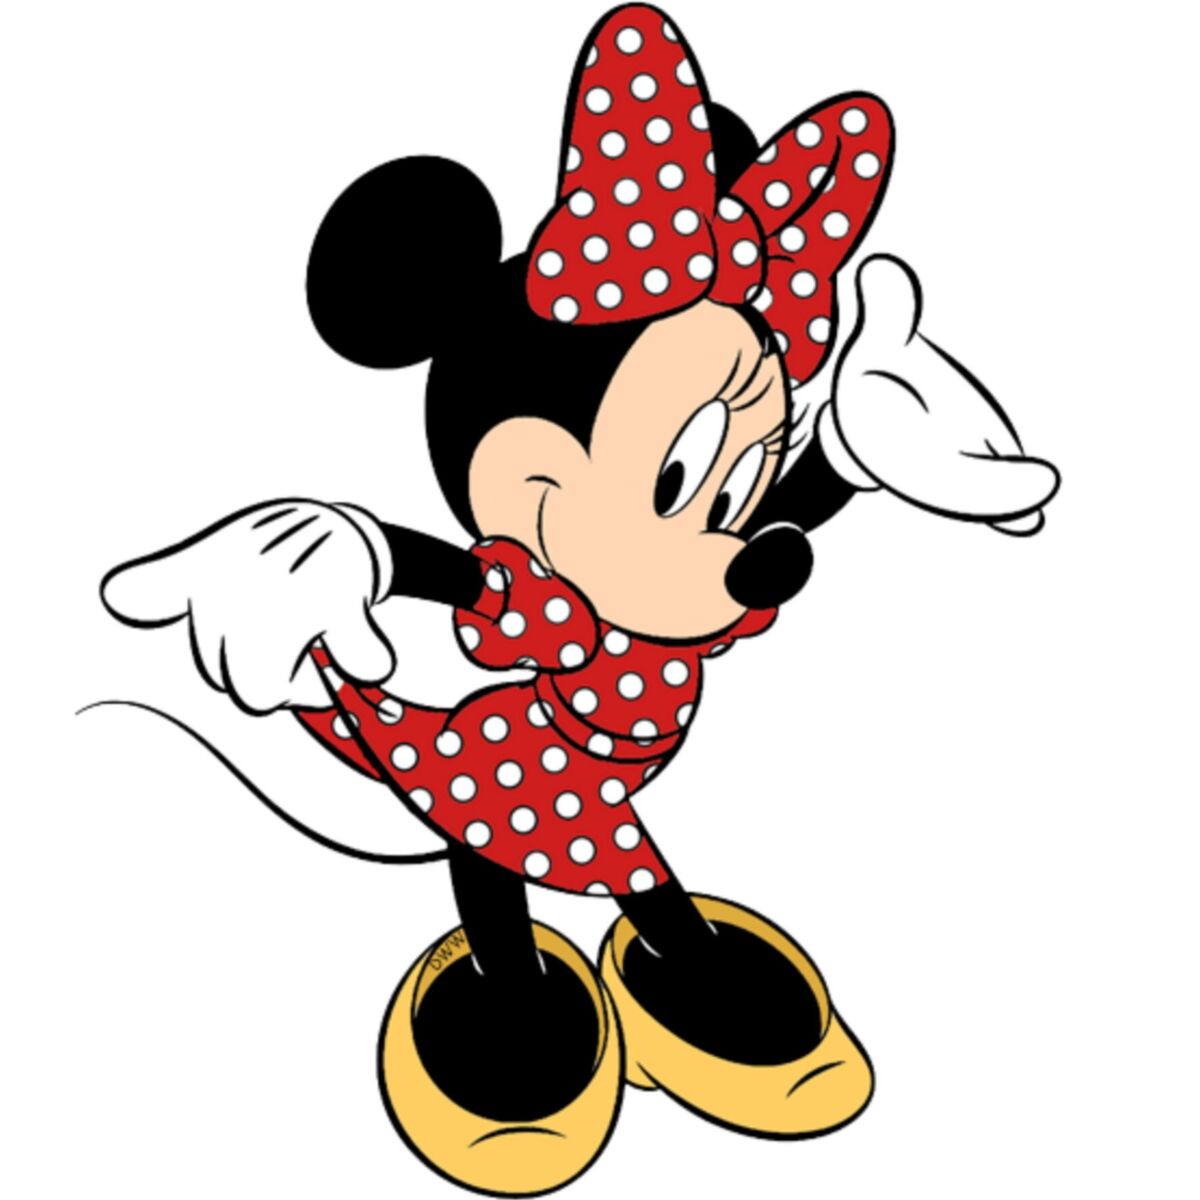 Minnie Mouse/Galería | Disney Wiki | Fandom